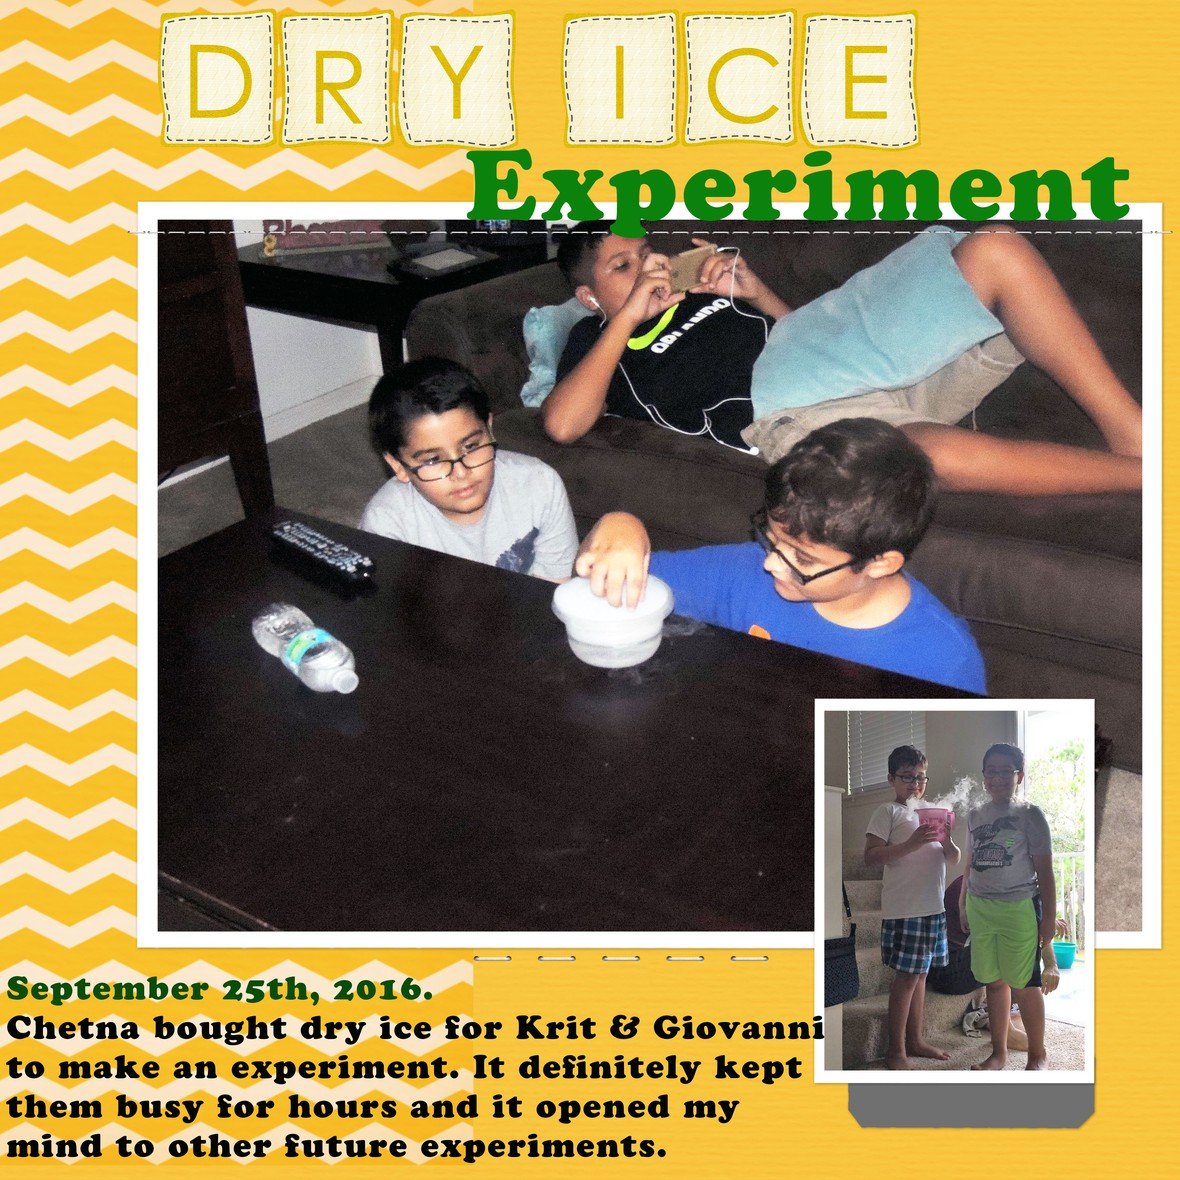 Dryiceexperiment original